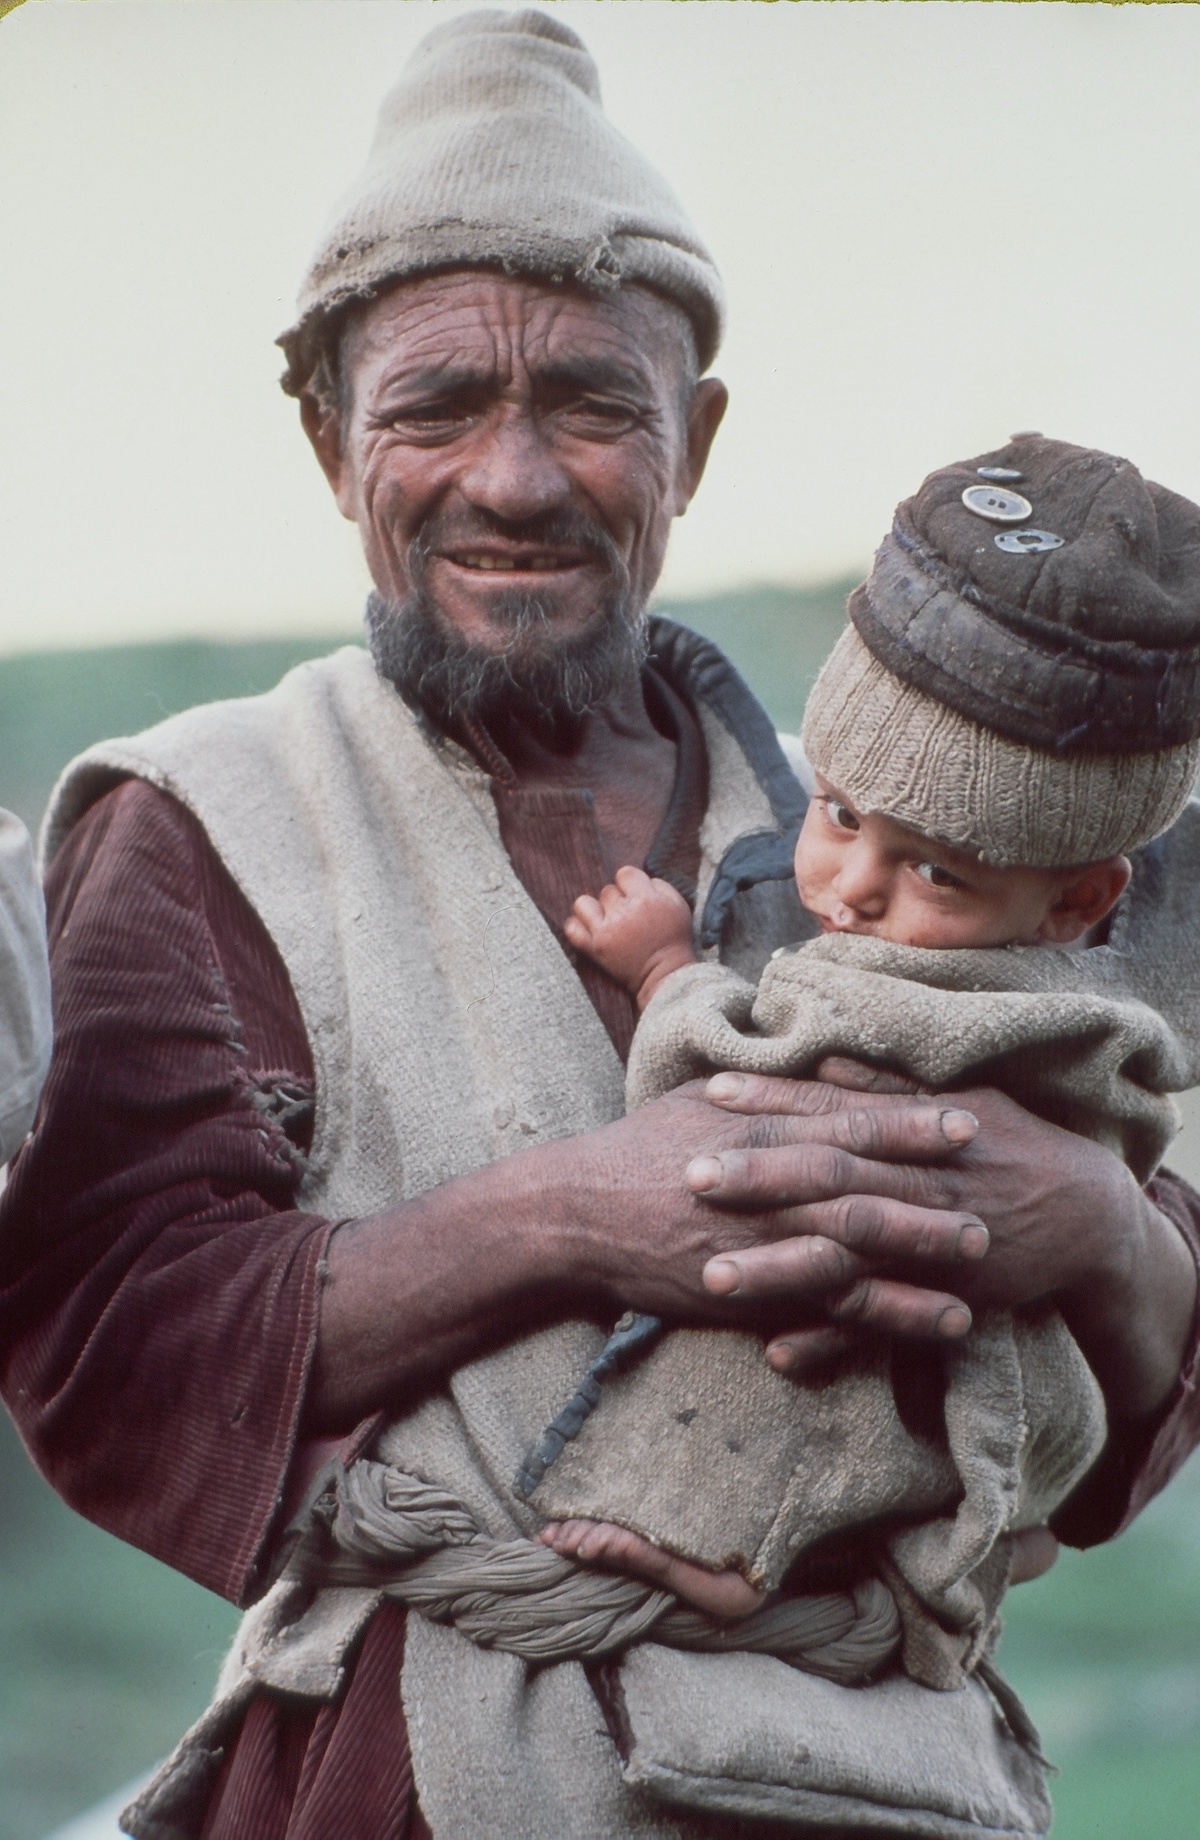 Unknown man with child. [Photo] Photographer unknown, Kim Schmitz collection